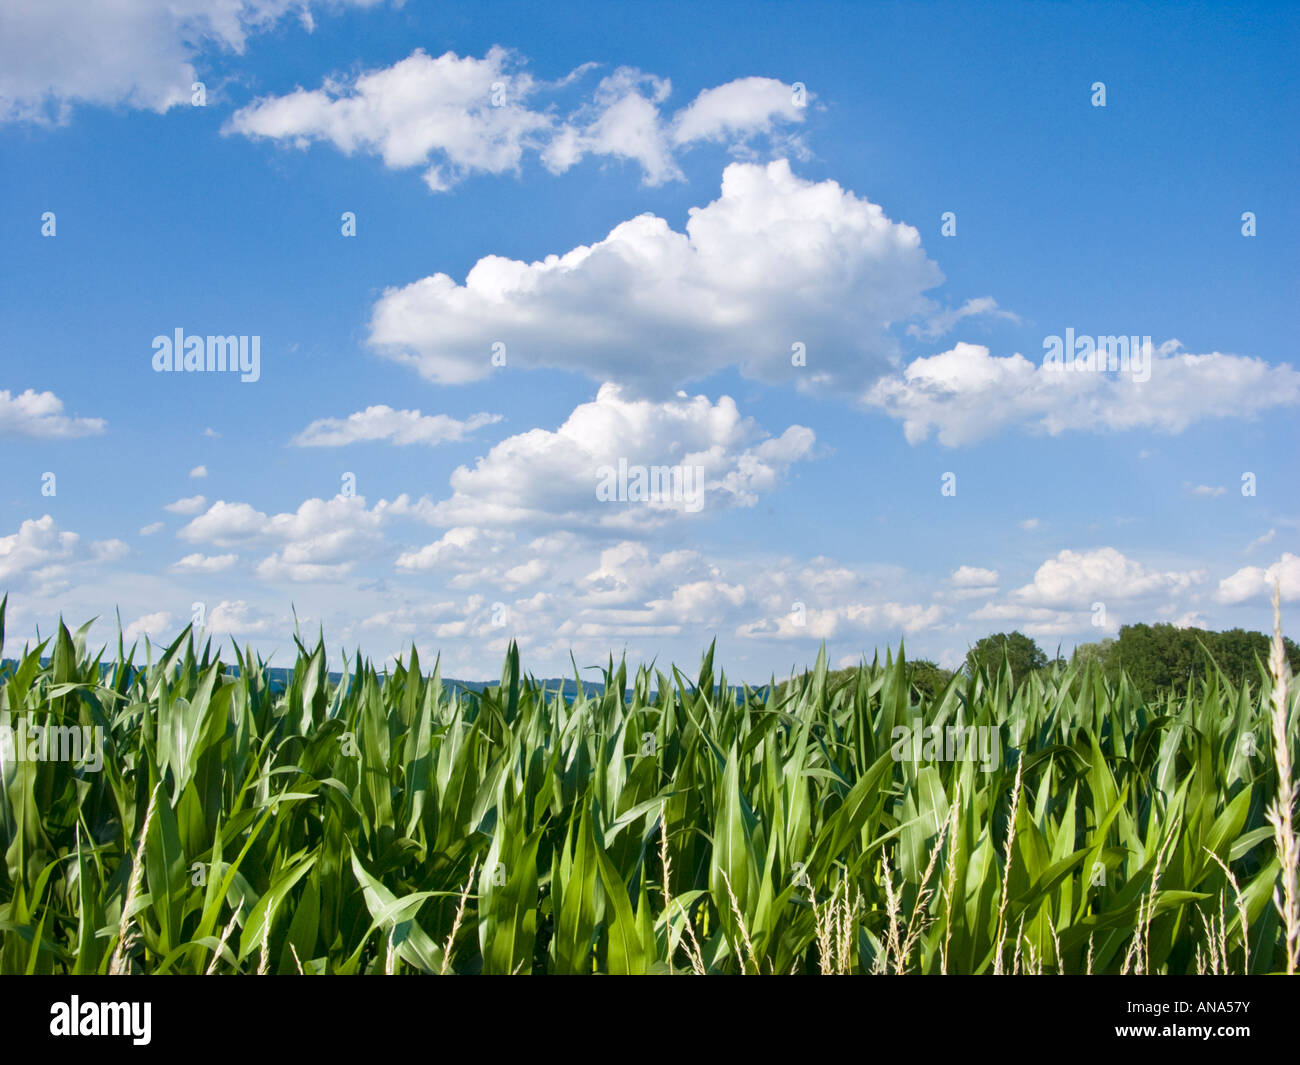 maize plants mais indian corn field cob blue sky clouds germany europe bavaria field farm farmer farming grow growing greens Stock Photo